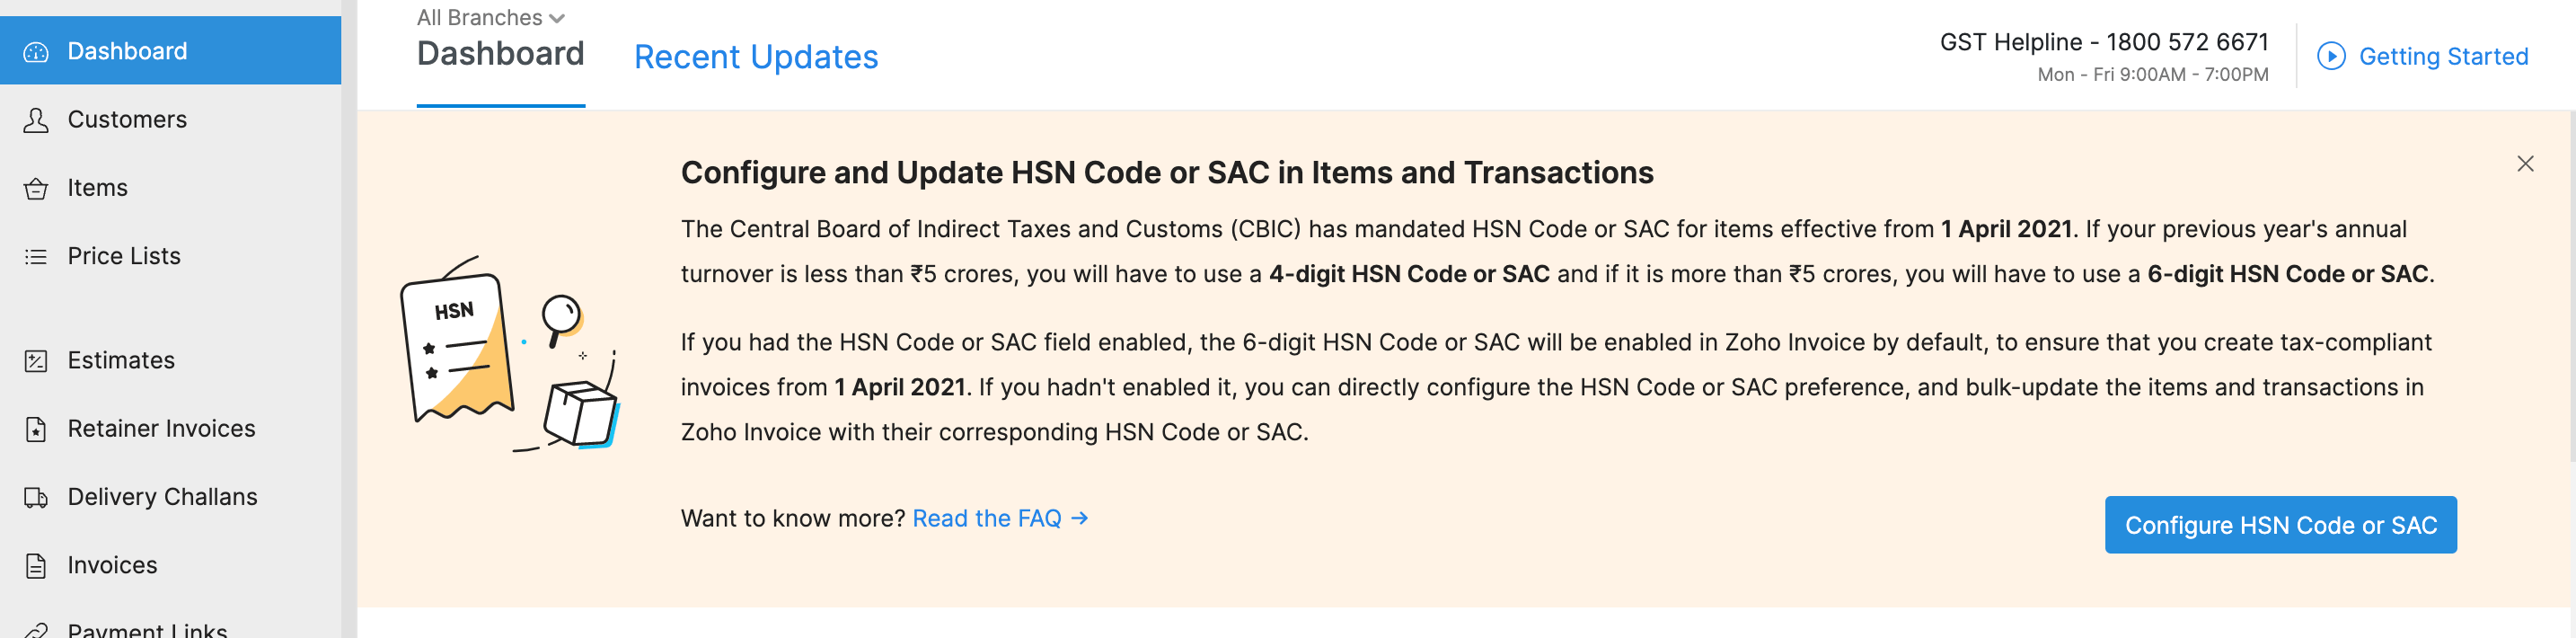 Configure HSN Code or SAC